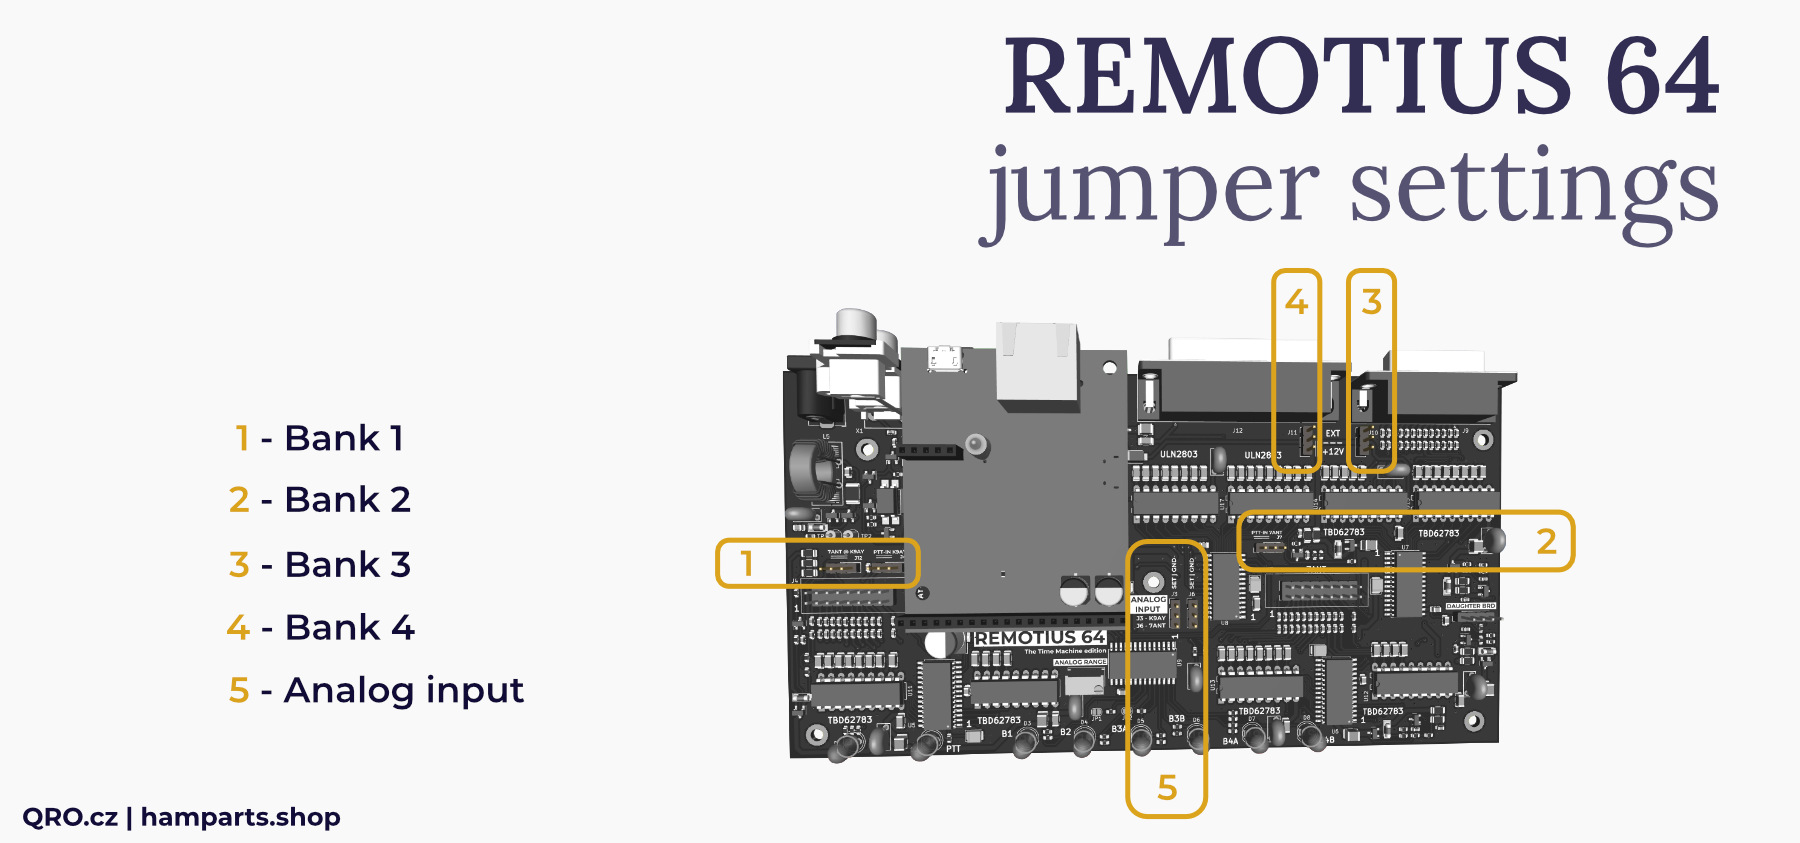 remotius analog input jumper setting qro.cz hamparts.shop